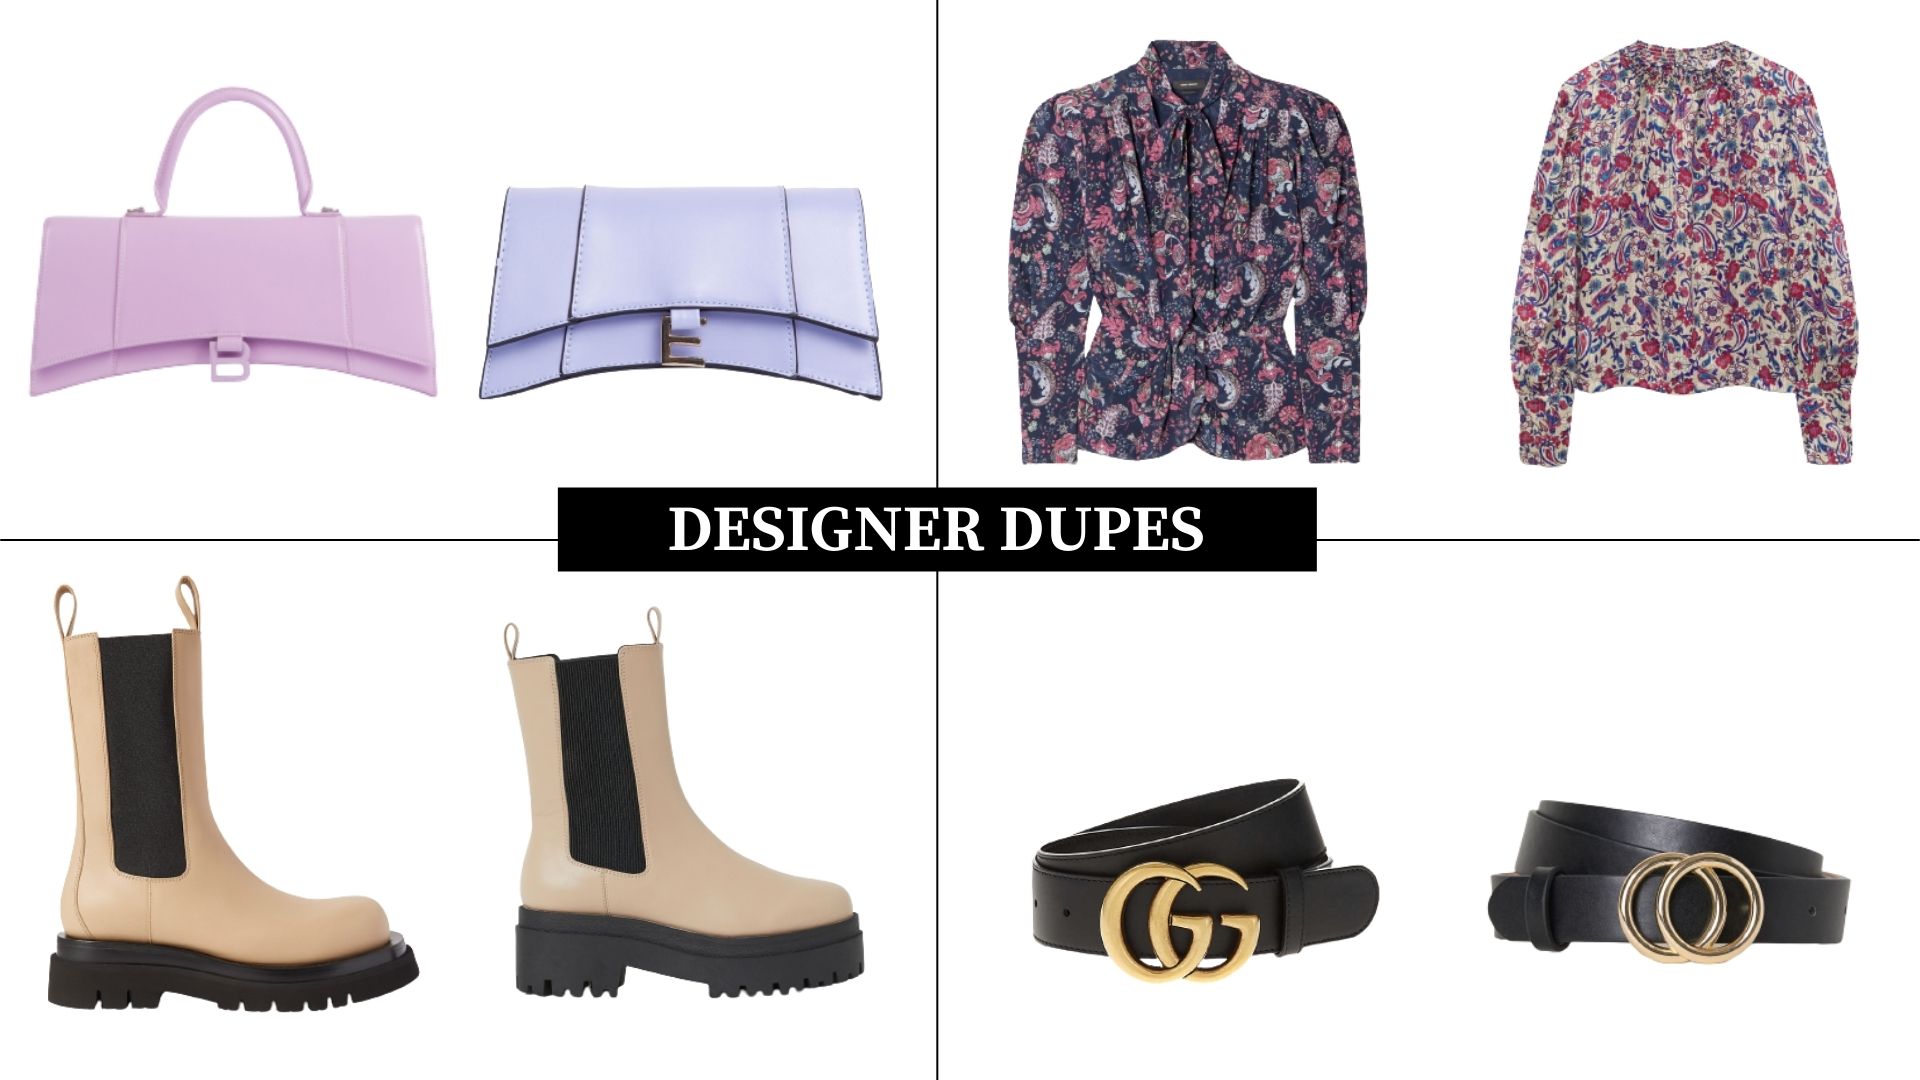 Designer dupes: where to buy designer copies for less